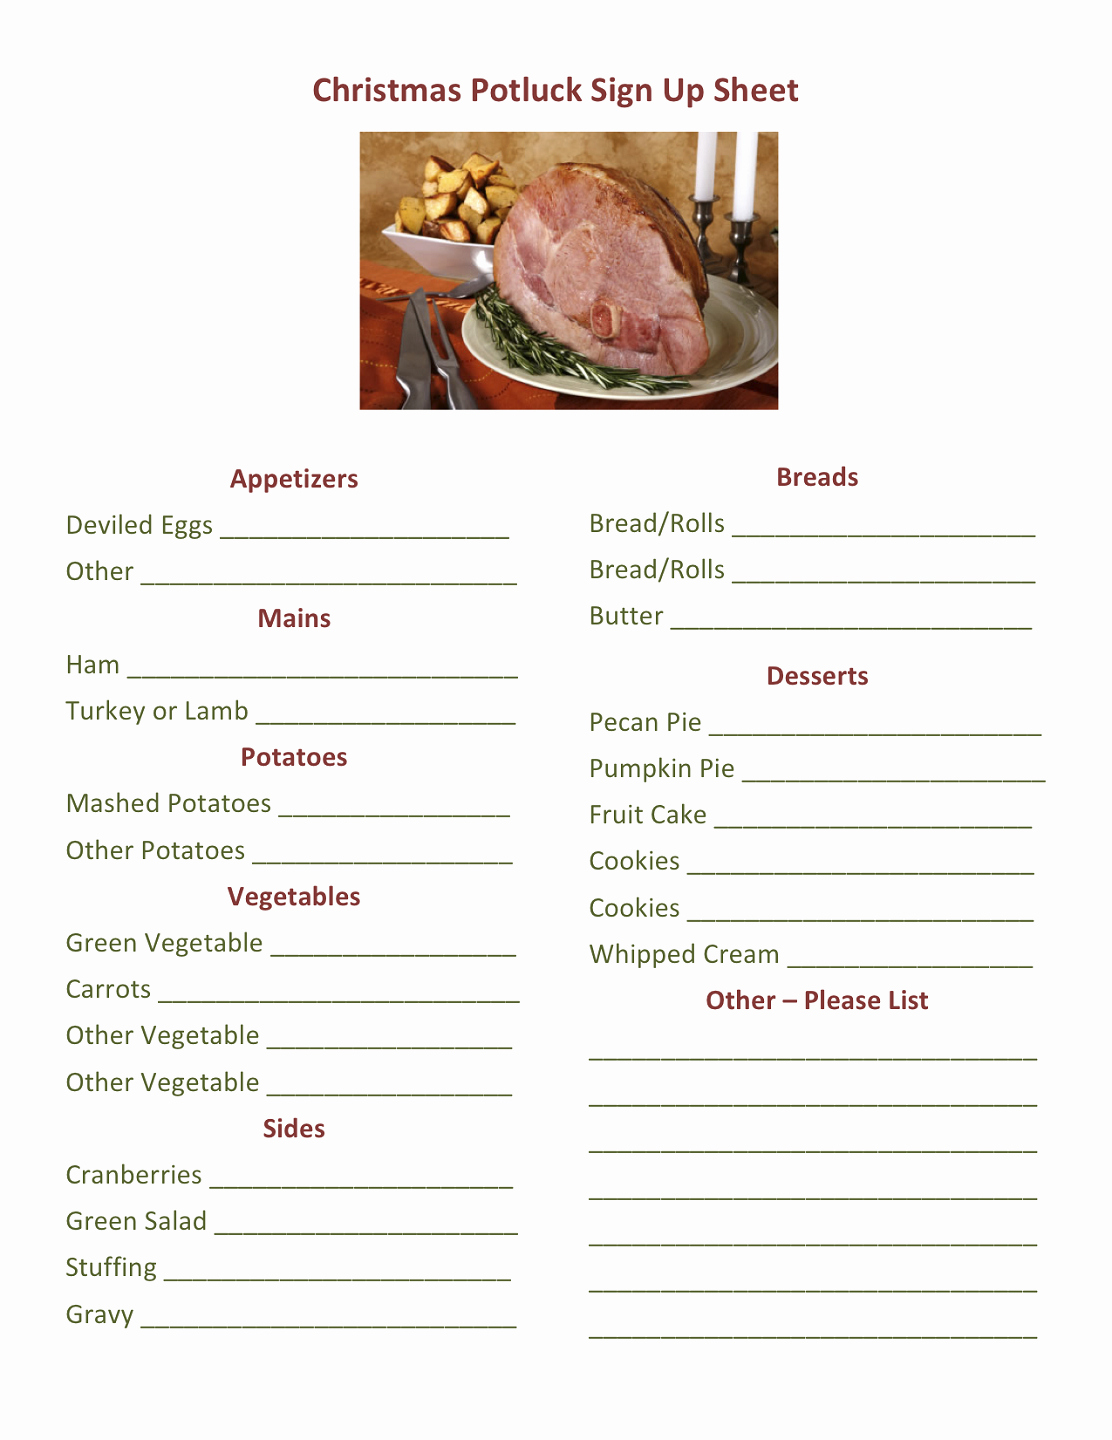 Holiday Party Sign Up Sheet Beautiful Potluck Dinner Sign Up Sheet Printable